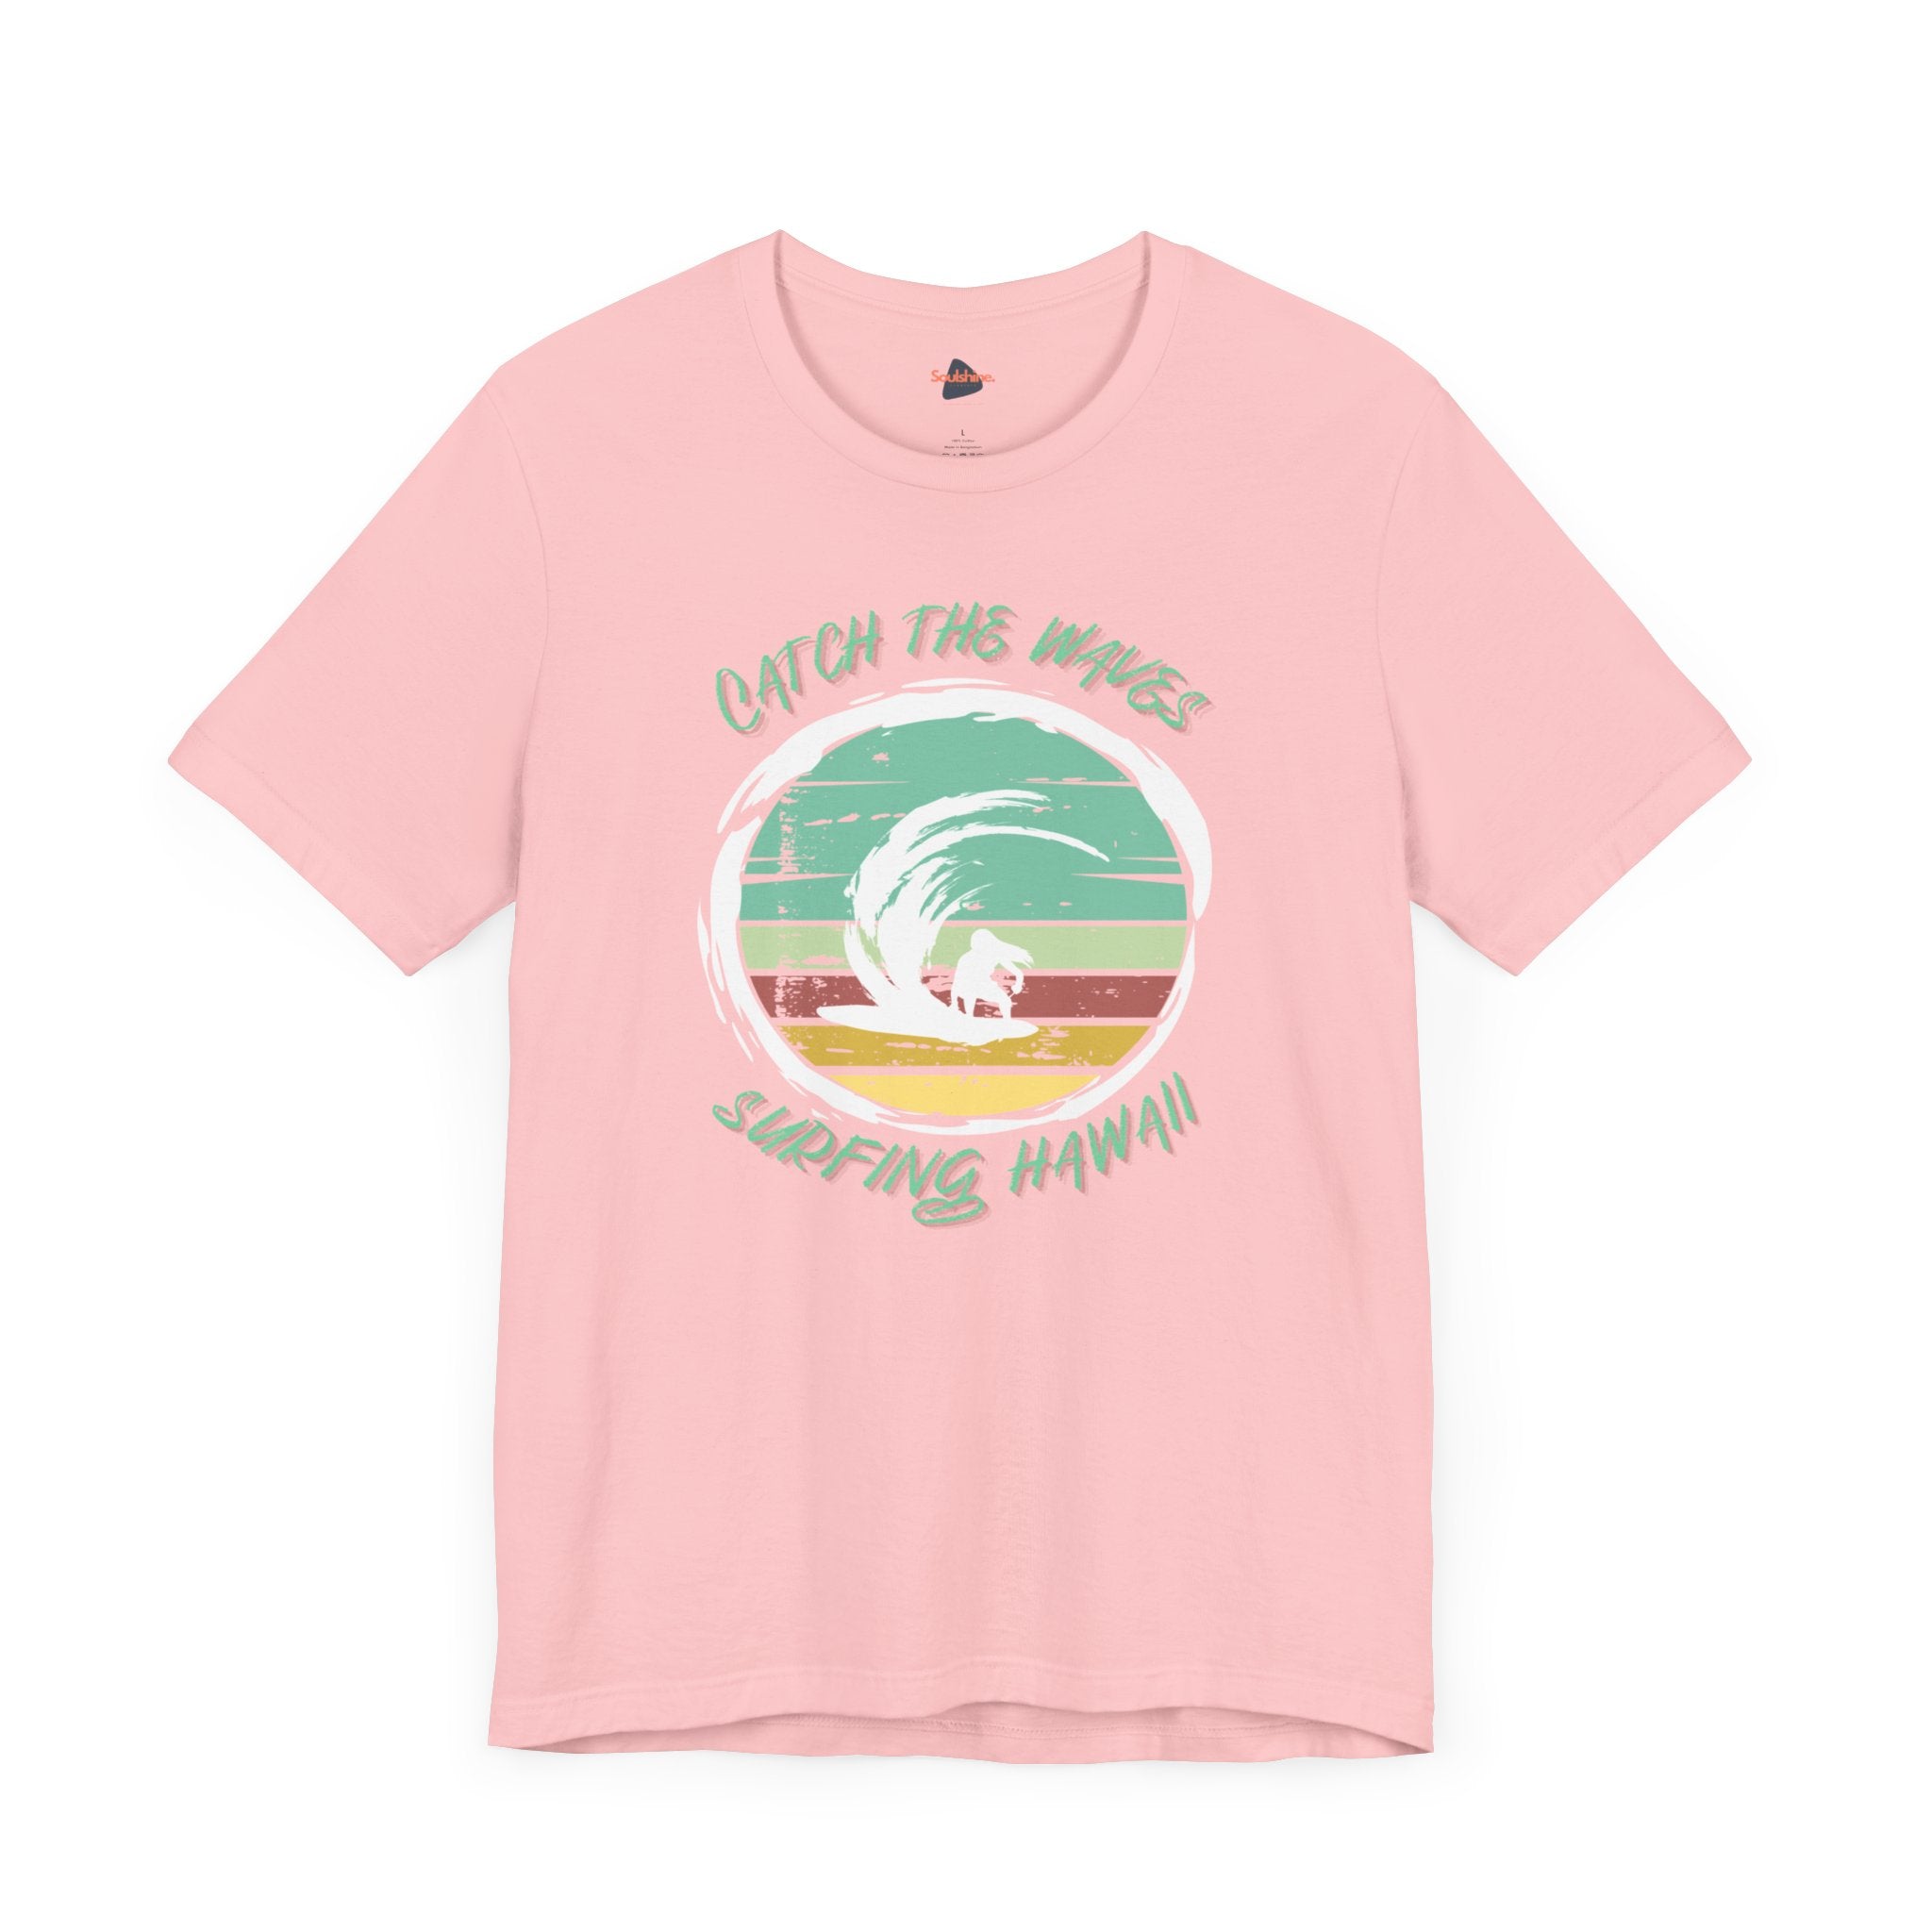 Catch the Waves Surfing T-Shirt: pink skunk printed on beach scene - Soulshinecreators - Unisex Jersey Short Sleeve Tee